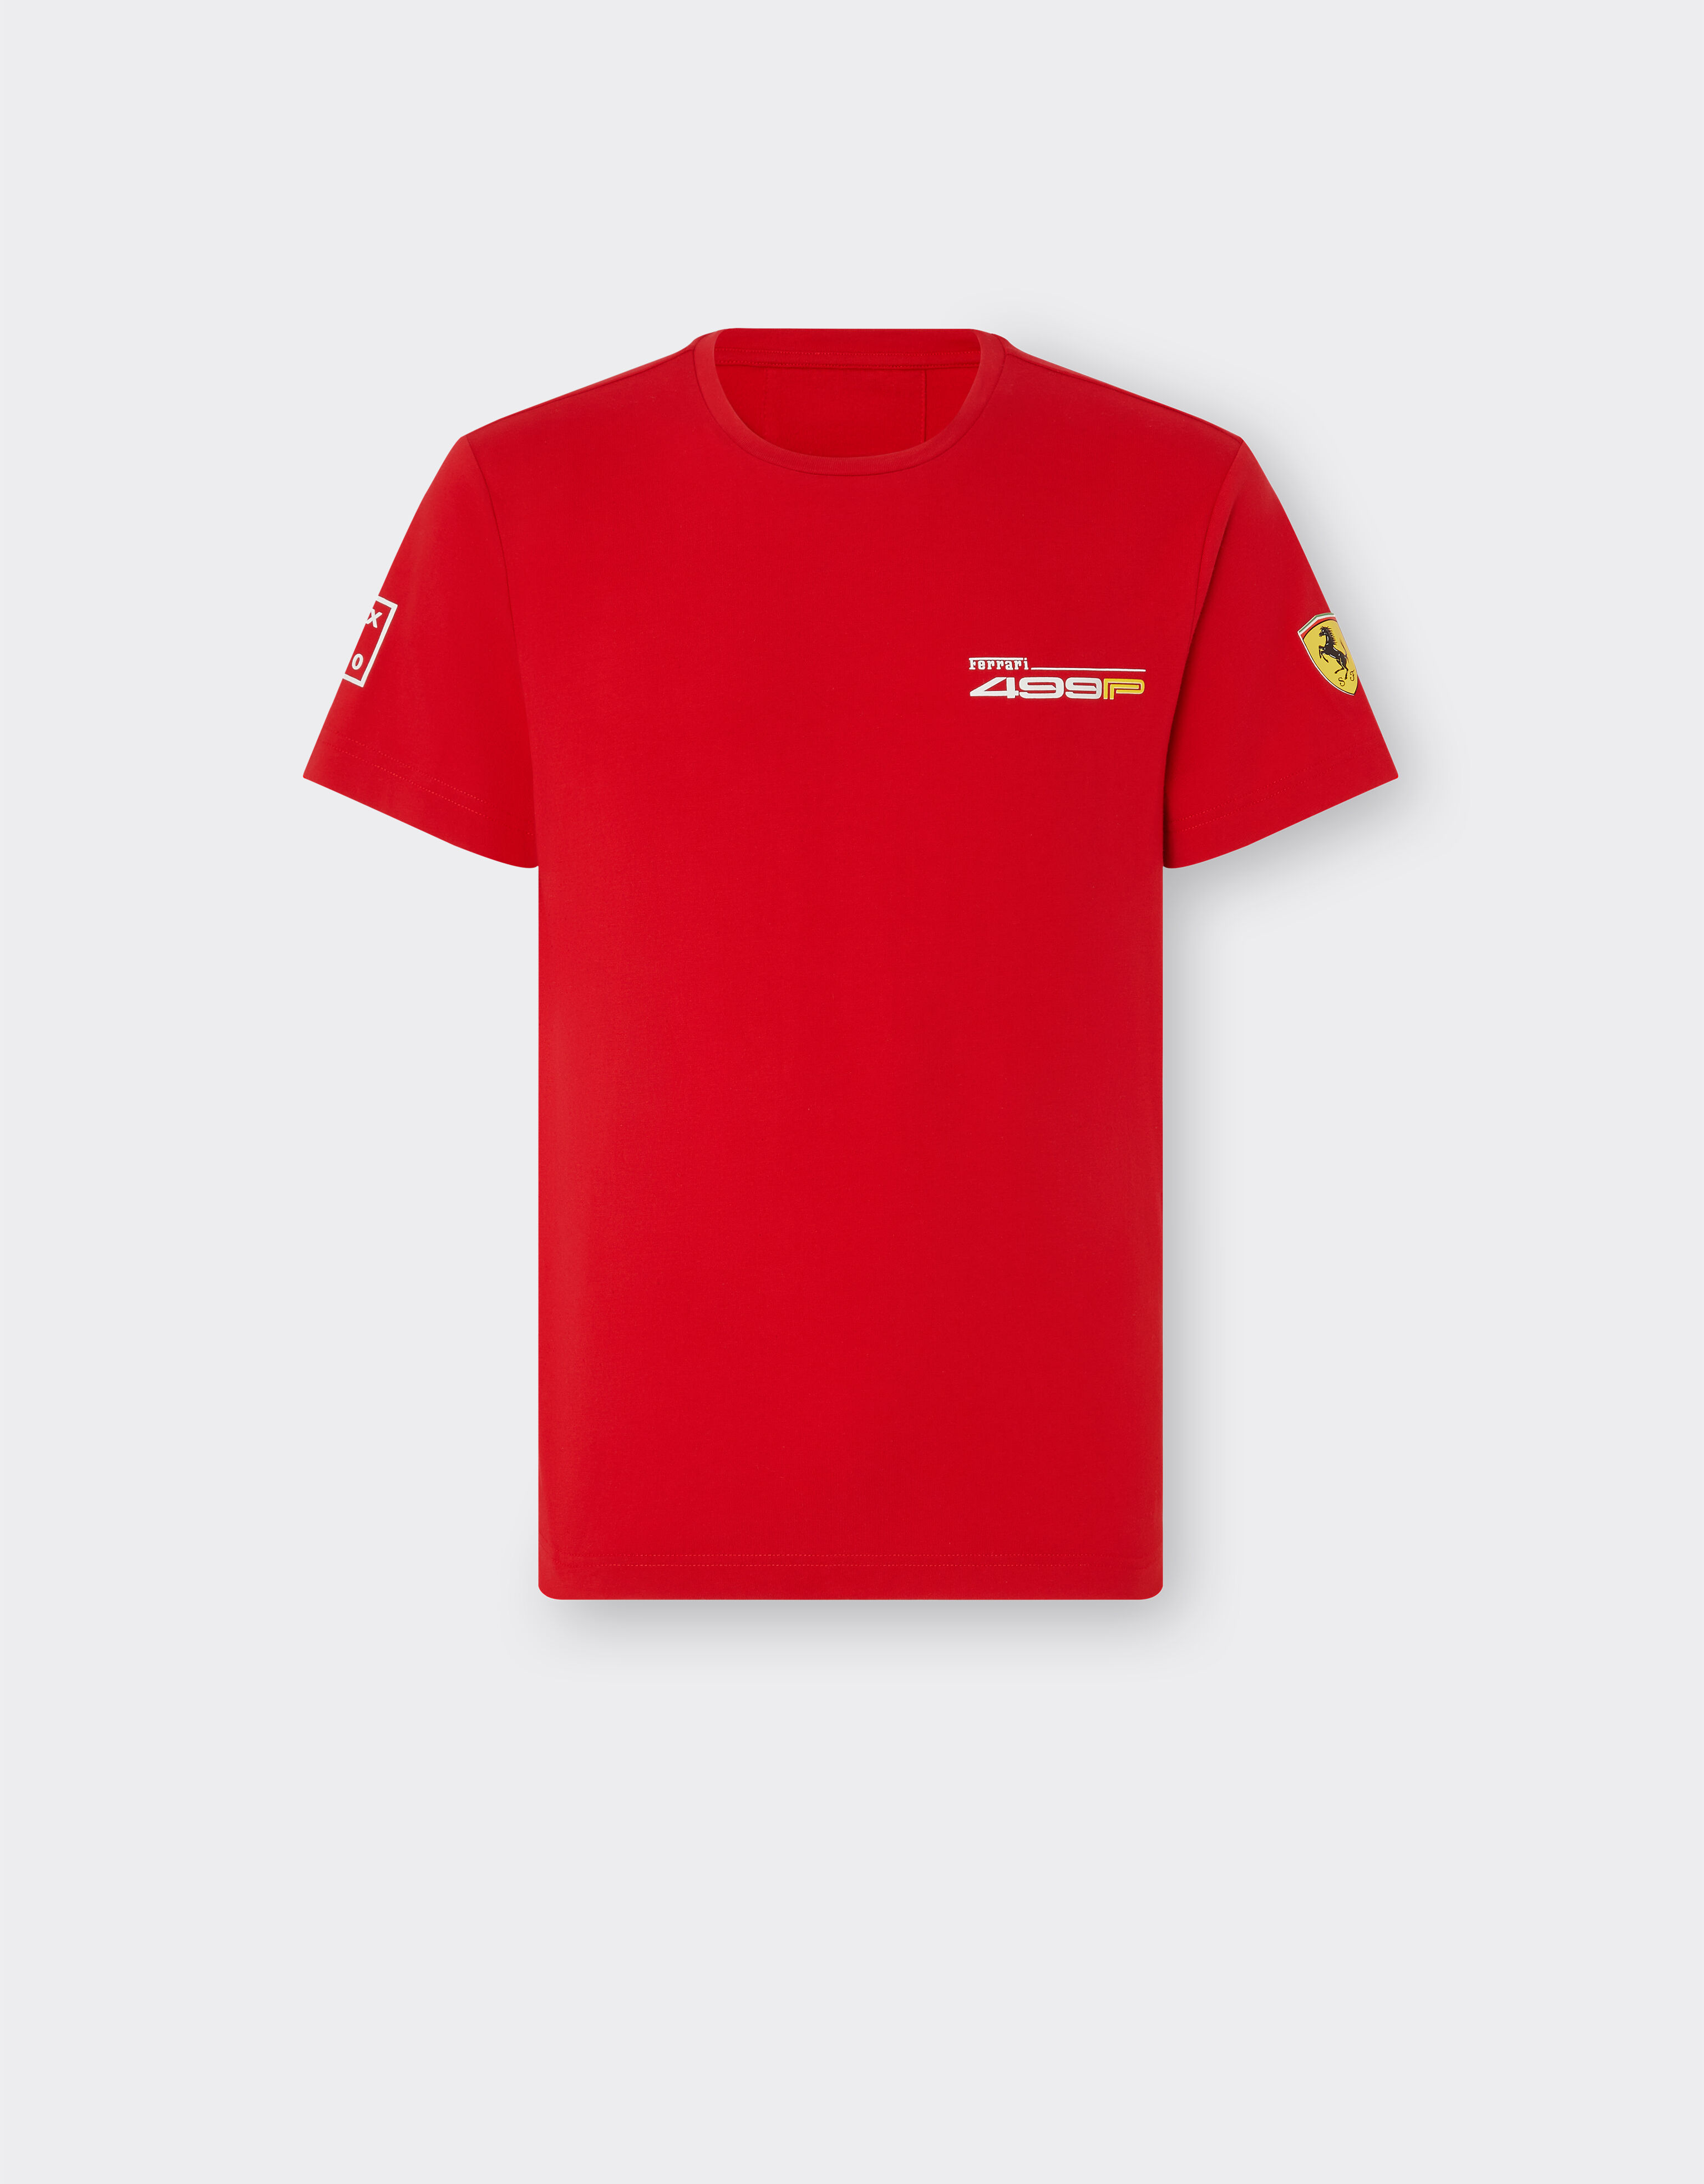 Ferrari T-shirt Ferrari Hypercar 499P Rosso F1317f